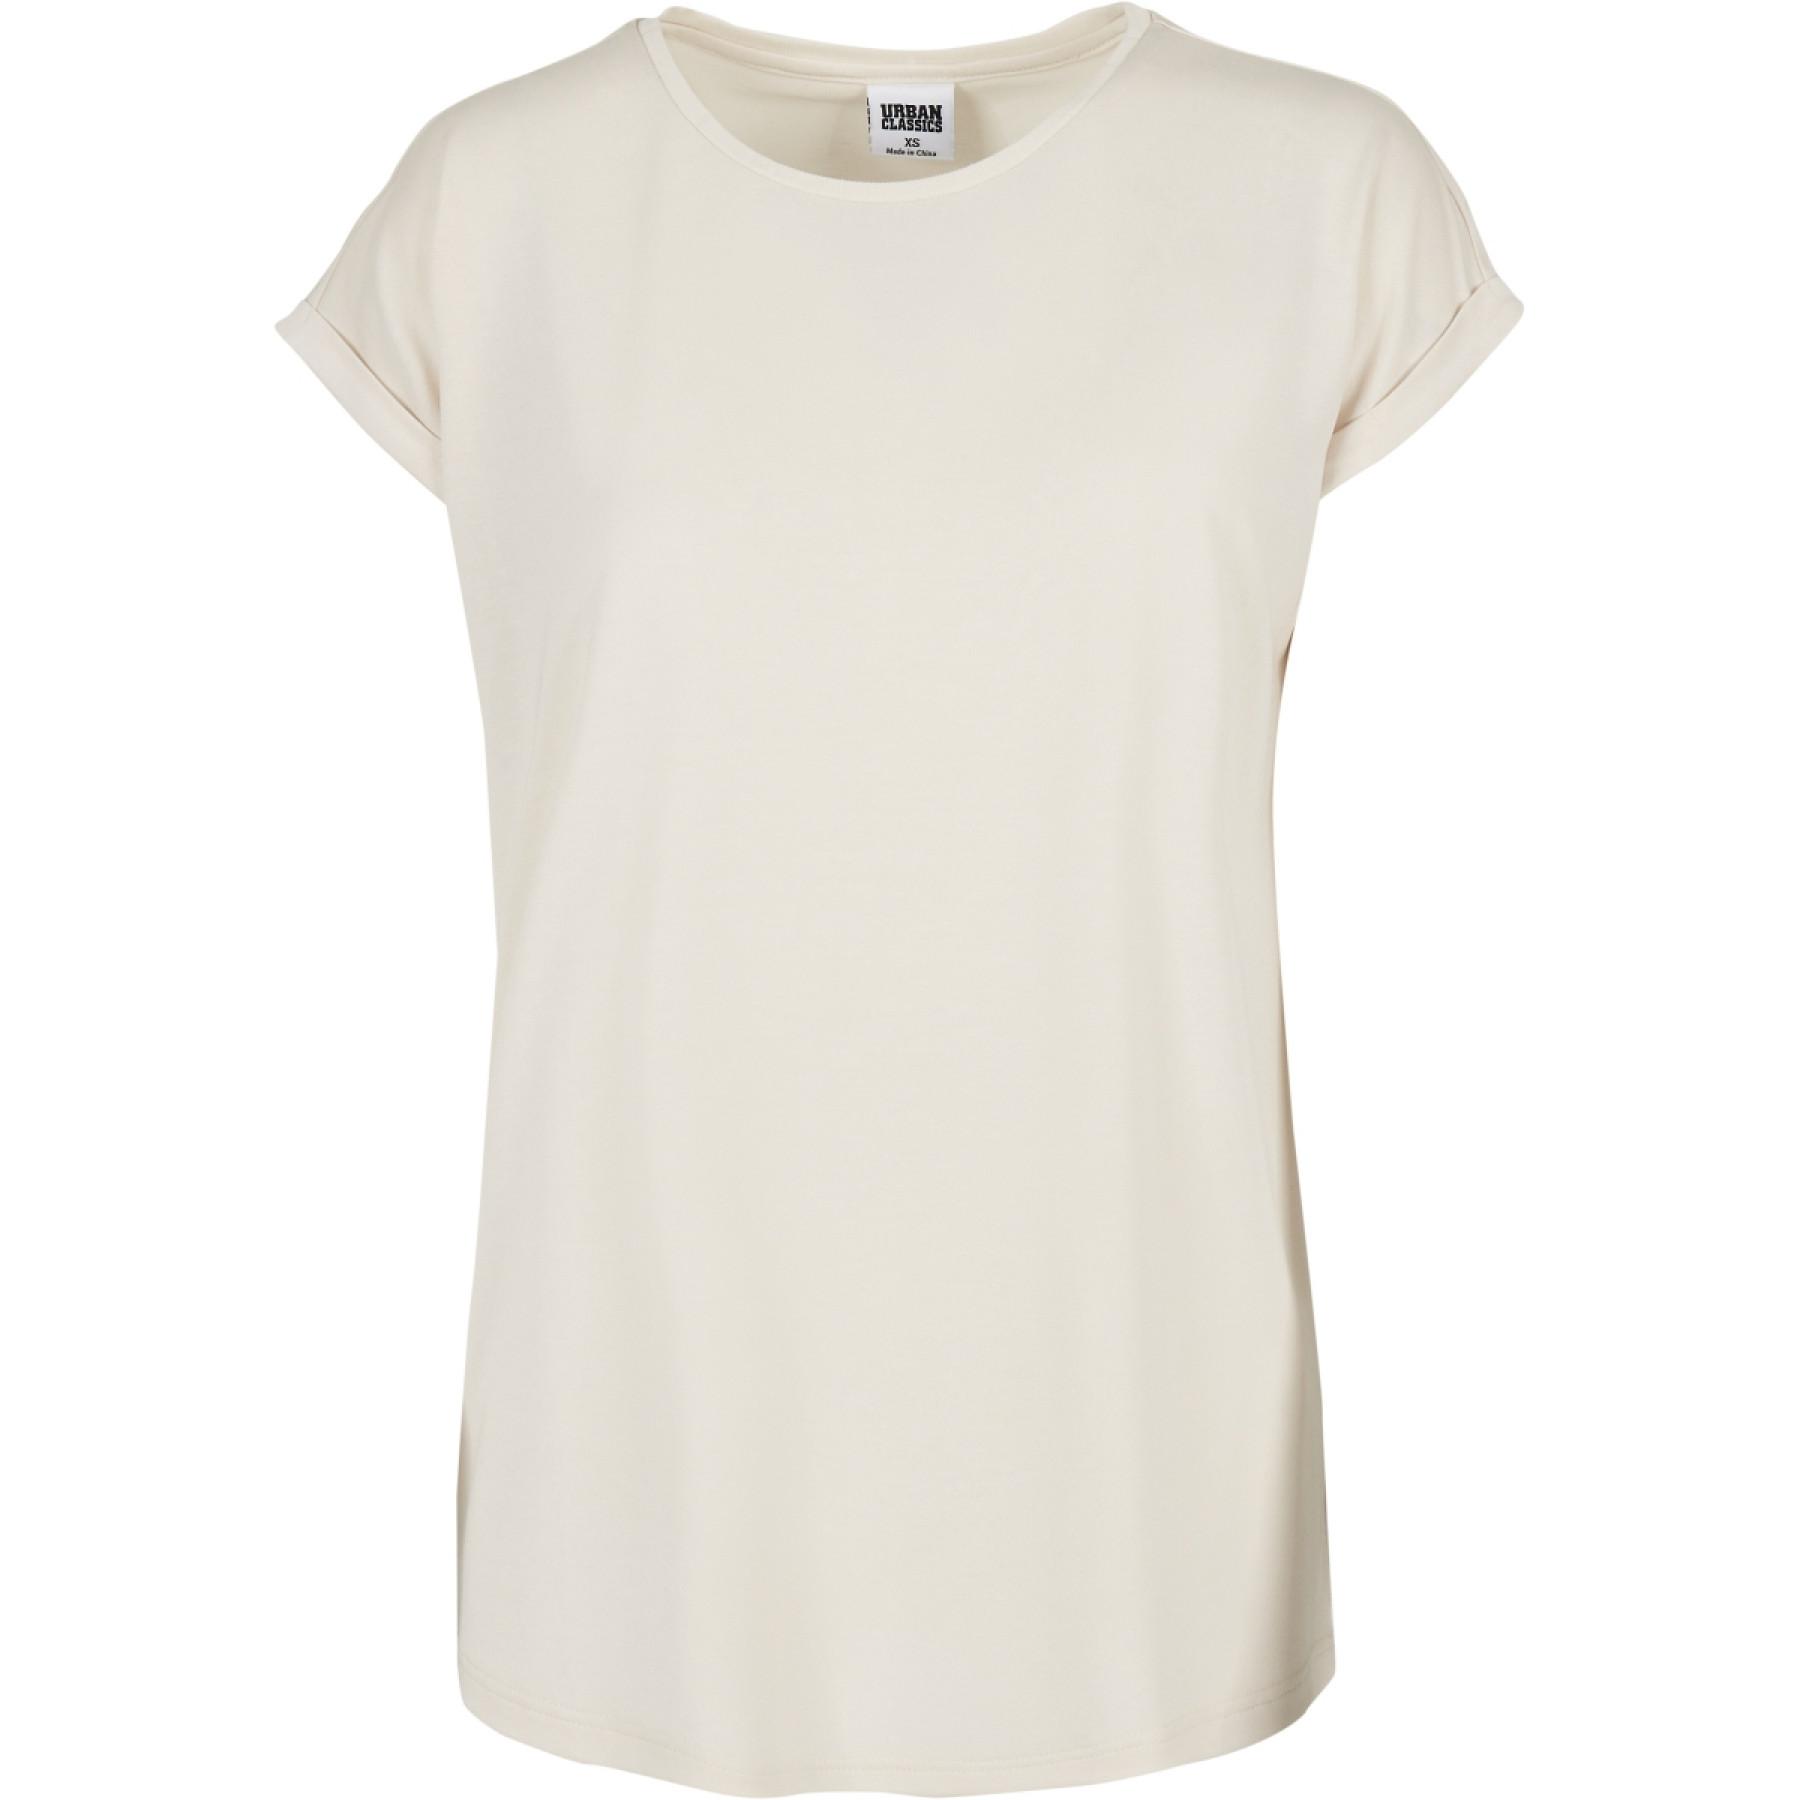 T-shirt femme Urban Classics modal extended shoulder